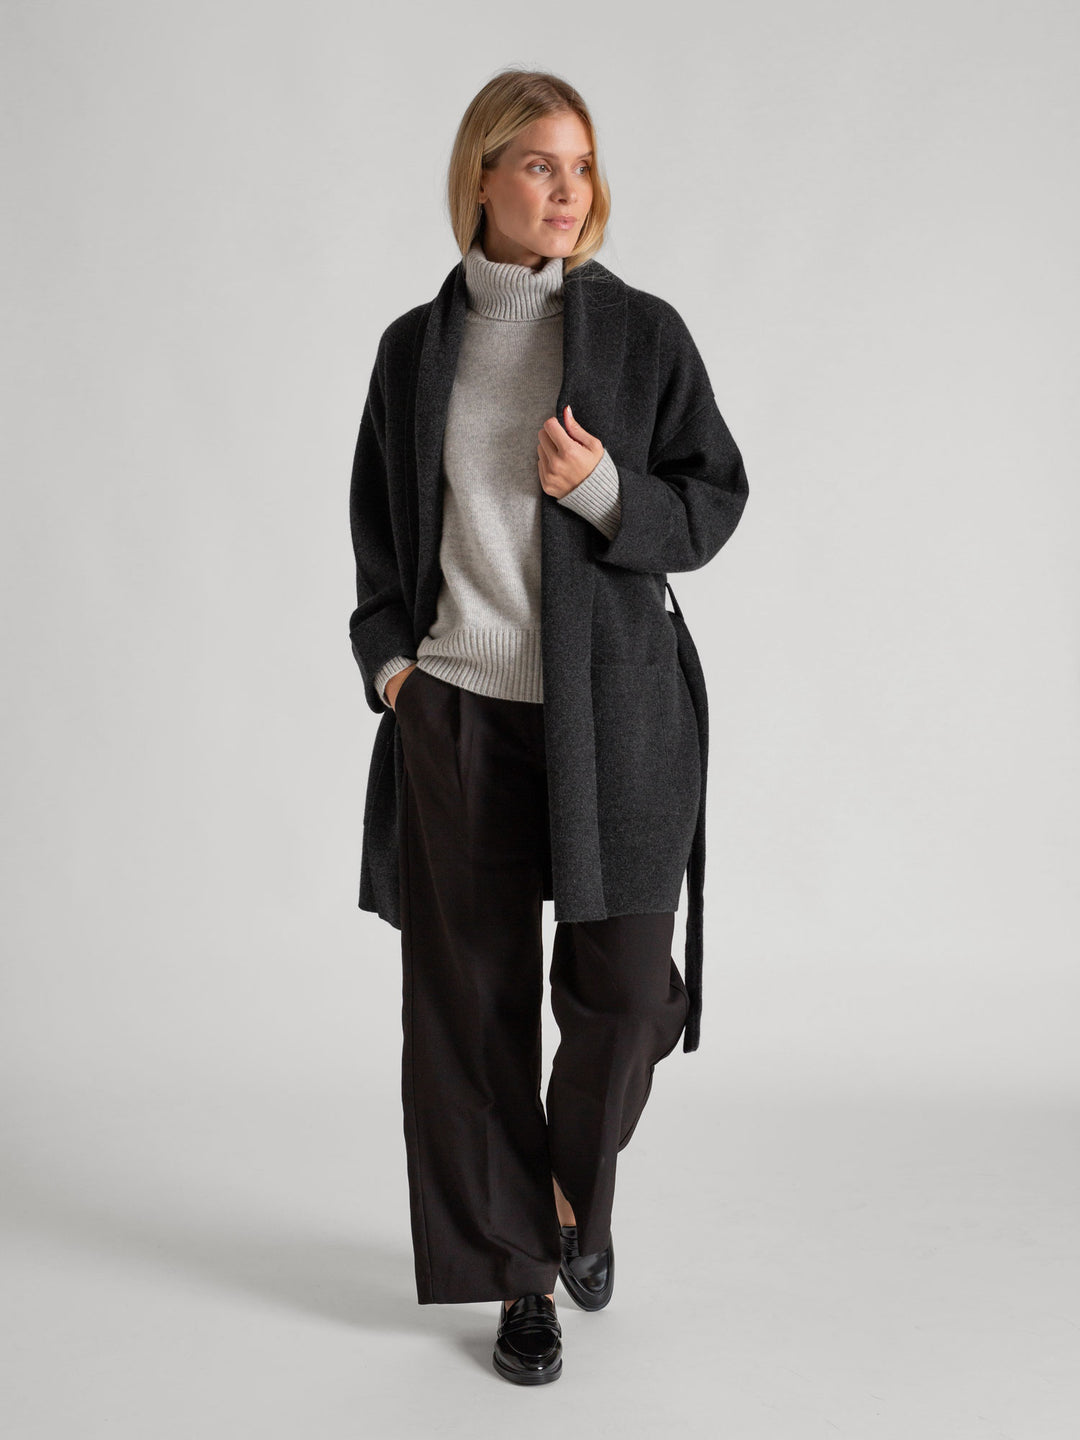 Cashmere coat "Liv" in 100% pure cashmere. Scandinavian design by Kashmina. Color: Charcoal.